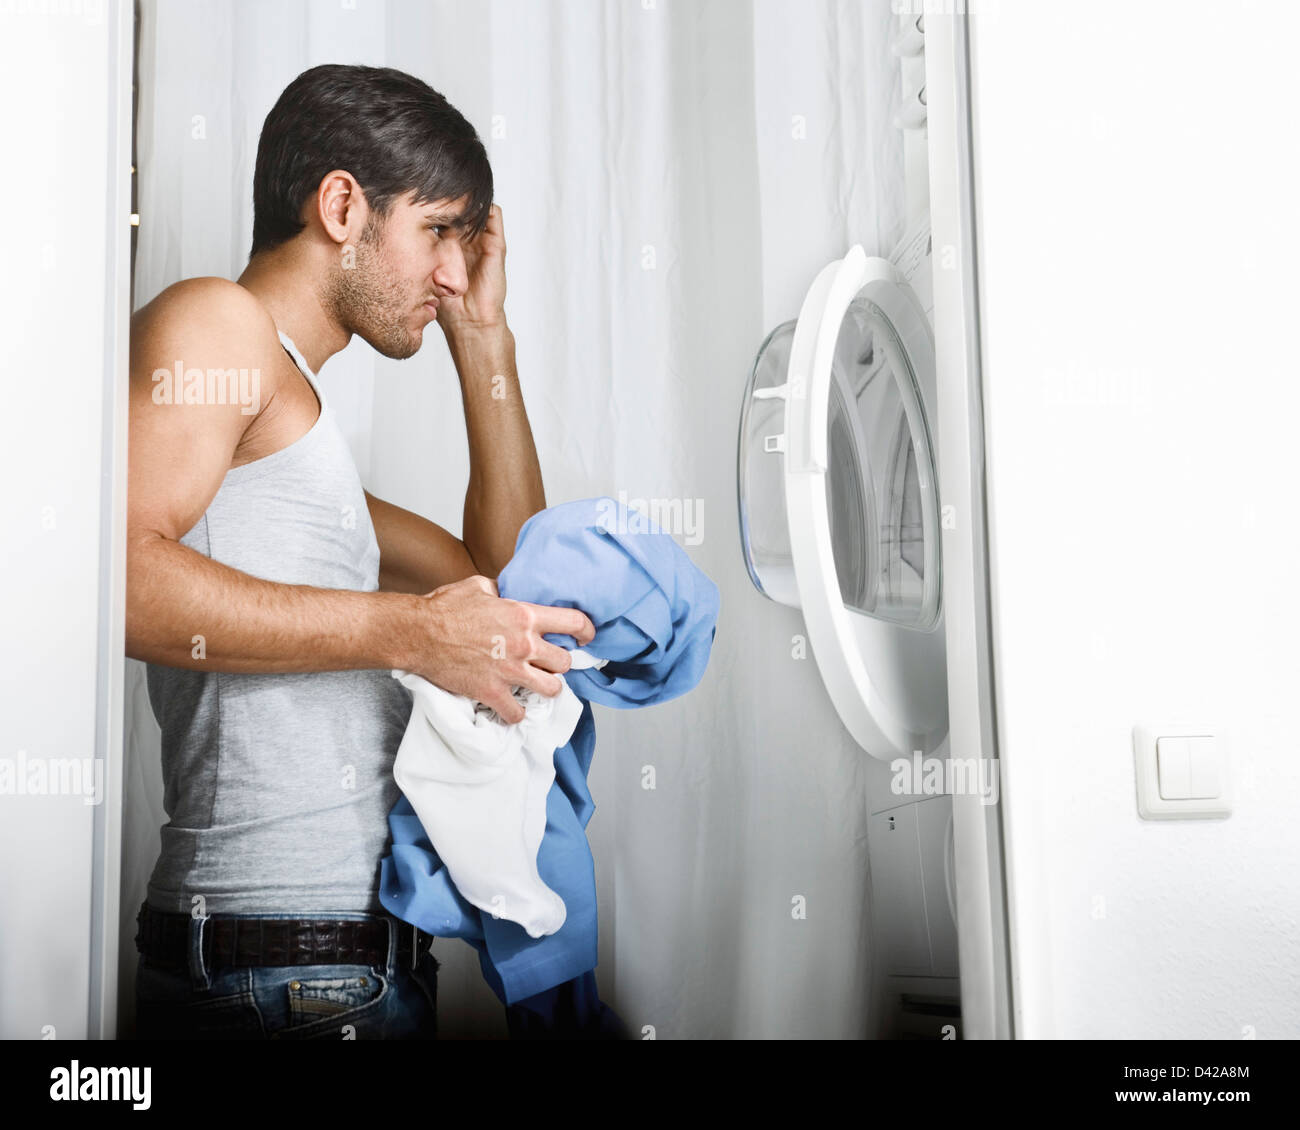 Man Having Problems Operating the Washing Machine on Laundry Day Stock Photo